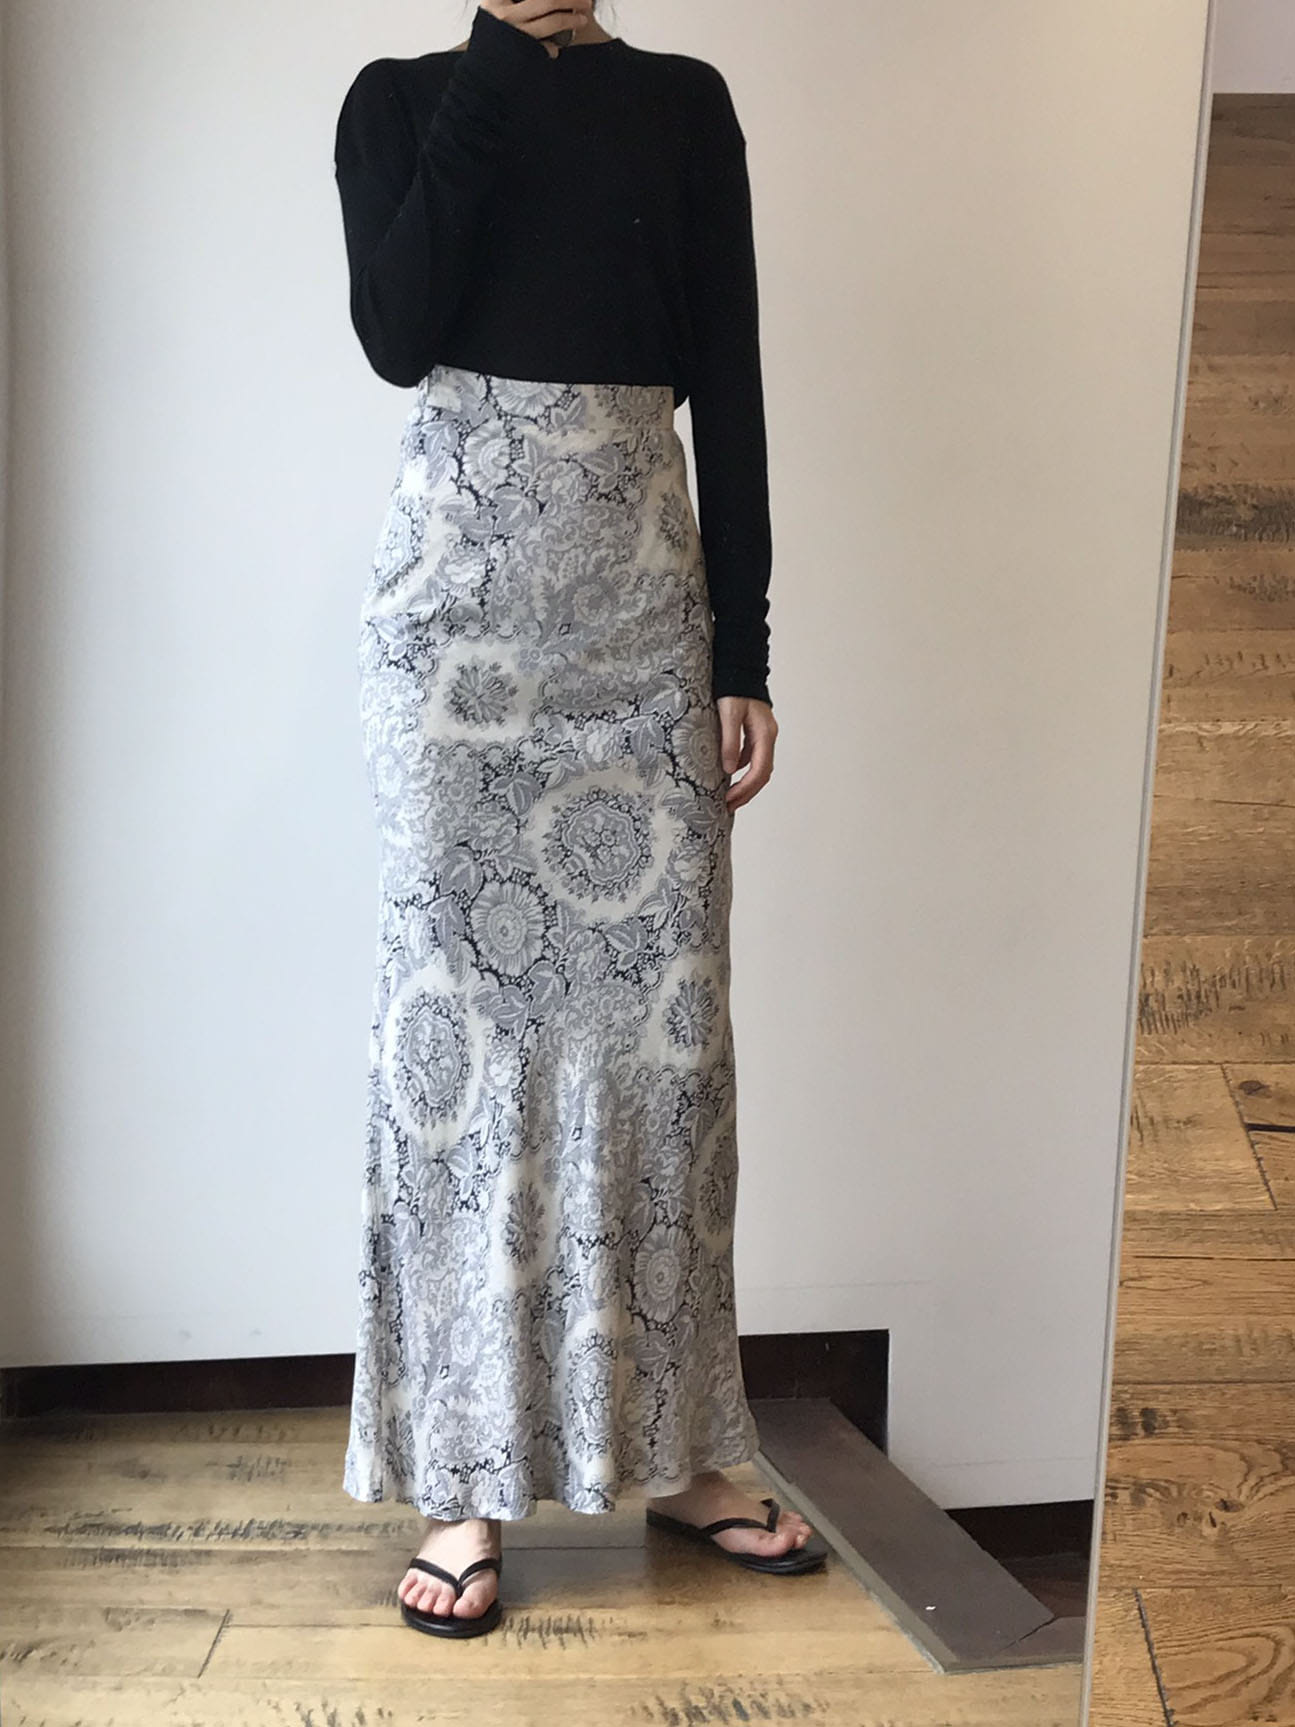 pattern skirt